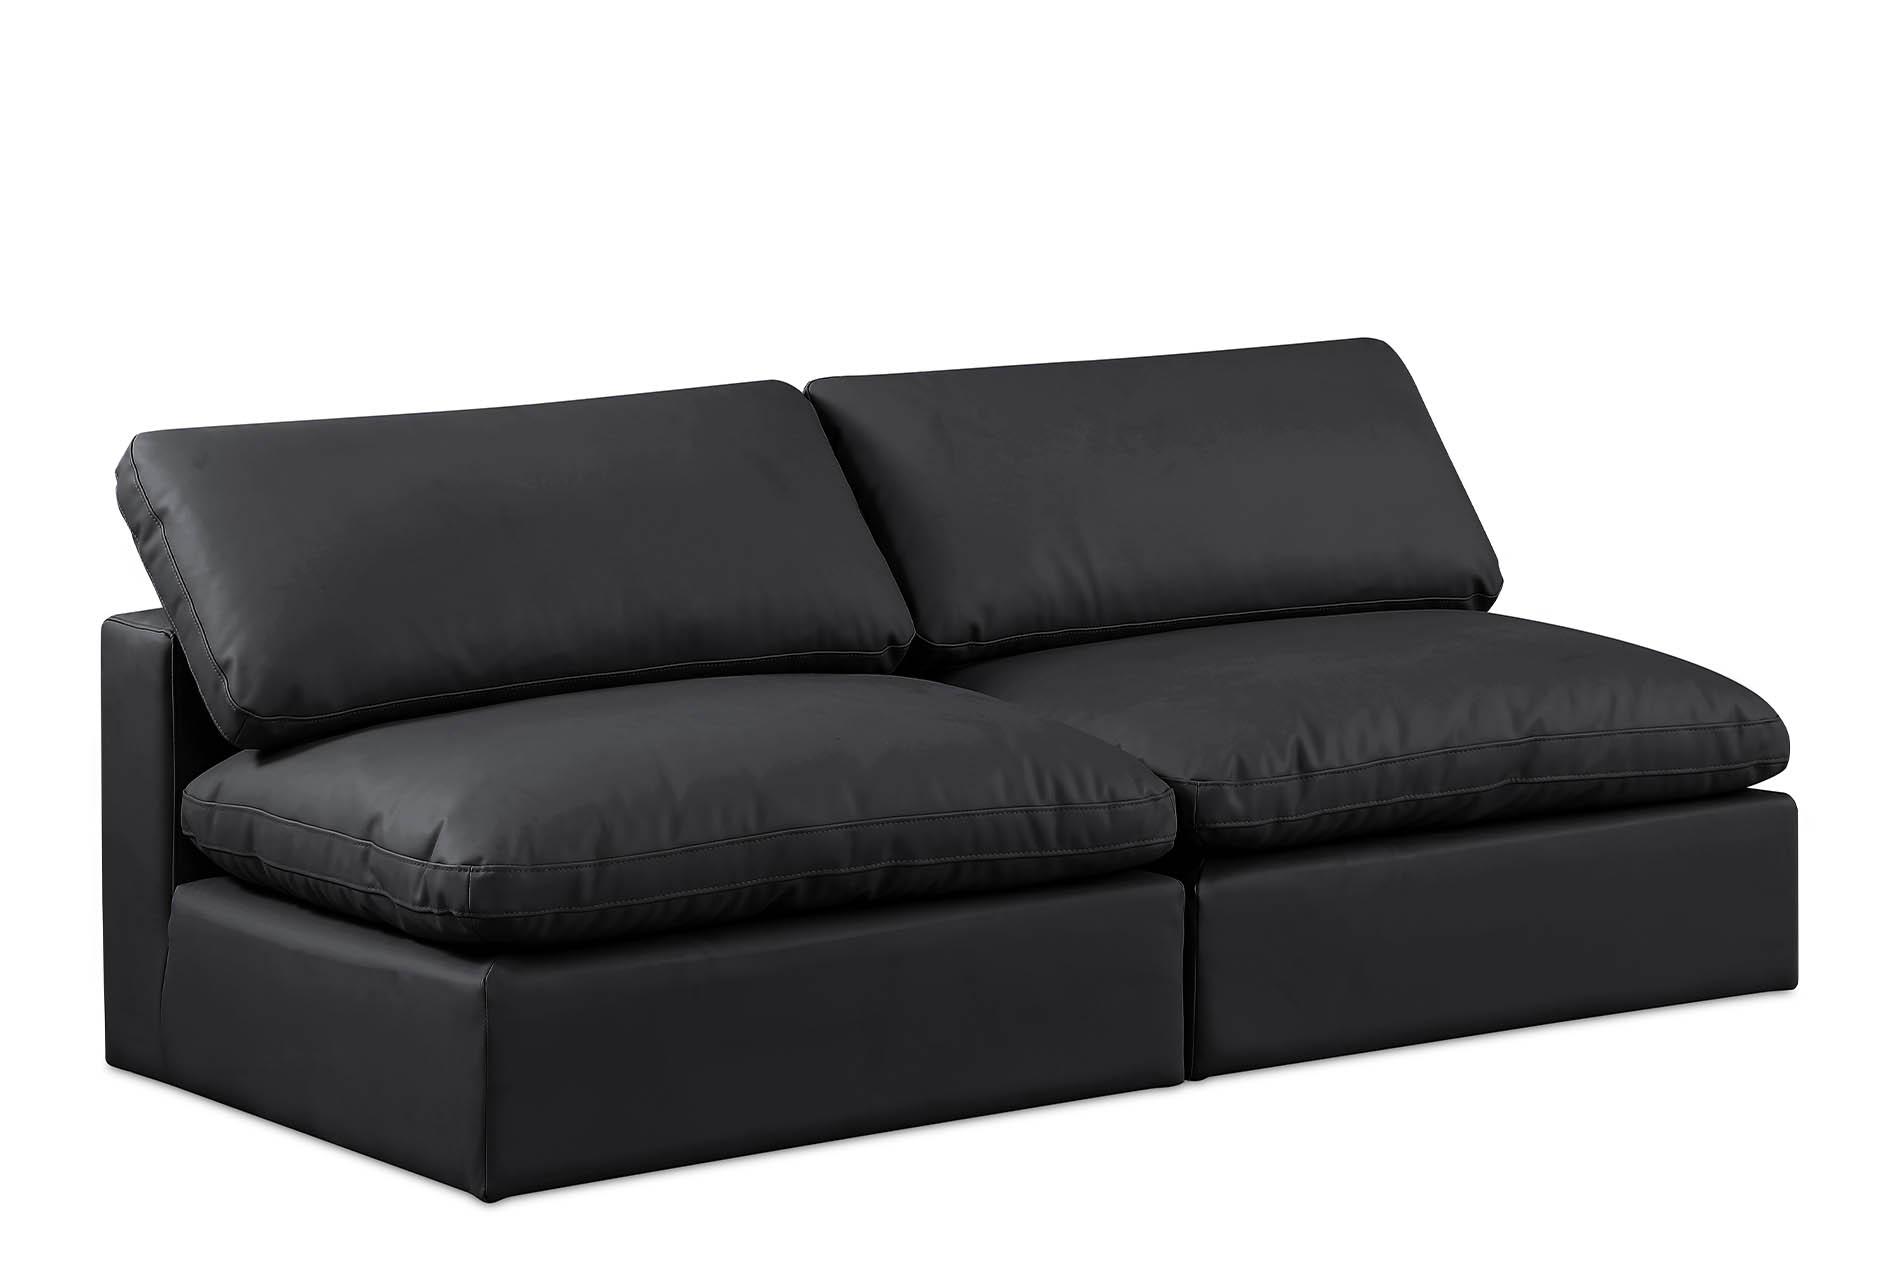 Contemporary, Modern Modular Sofa 188Black-S78 188Black-S78 in Black Faux Leather